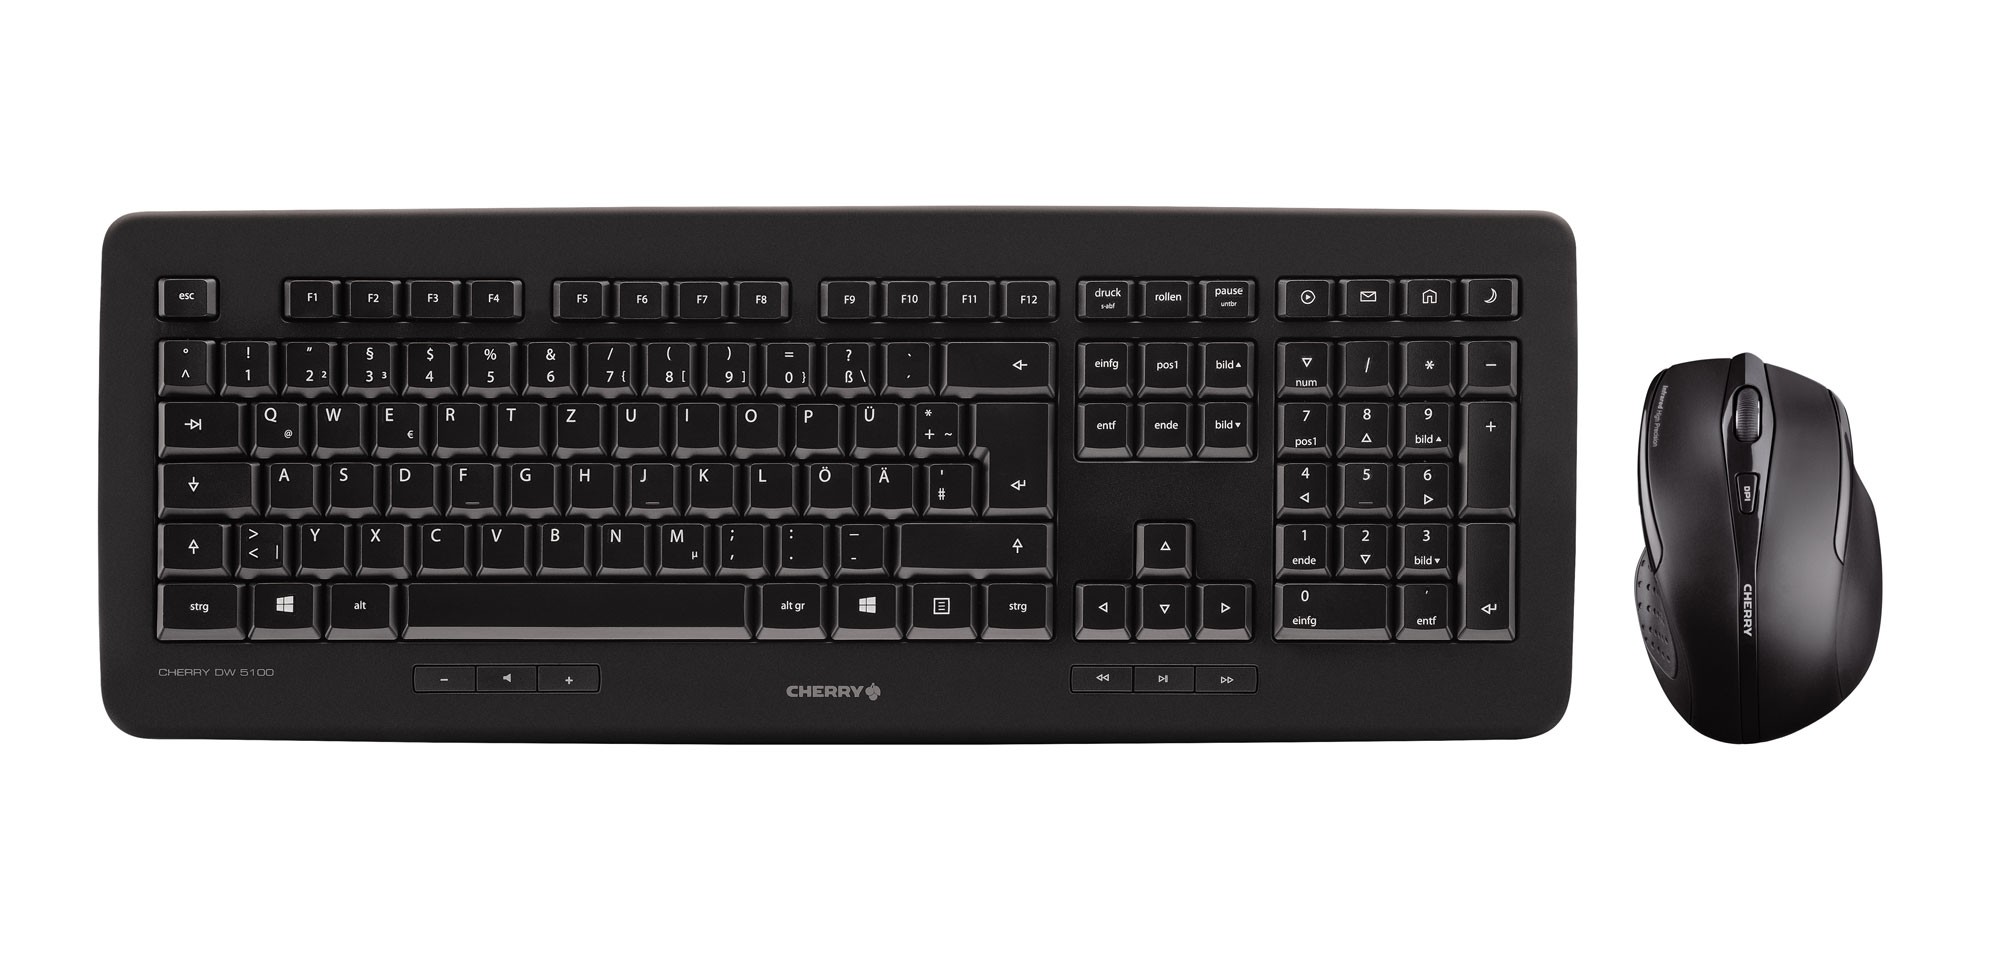 CHERRY Keyboard+Mouse DW 5100 wireless schwarz US/€ Layout